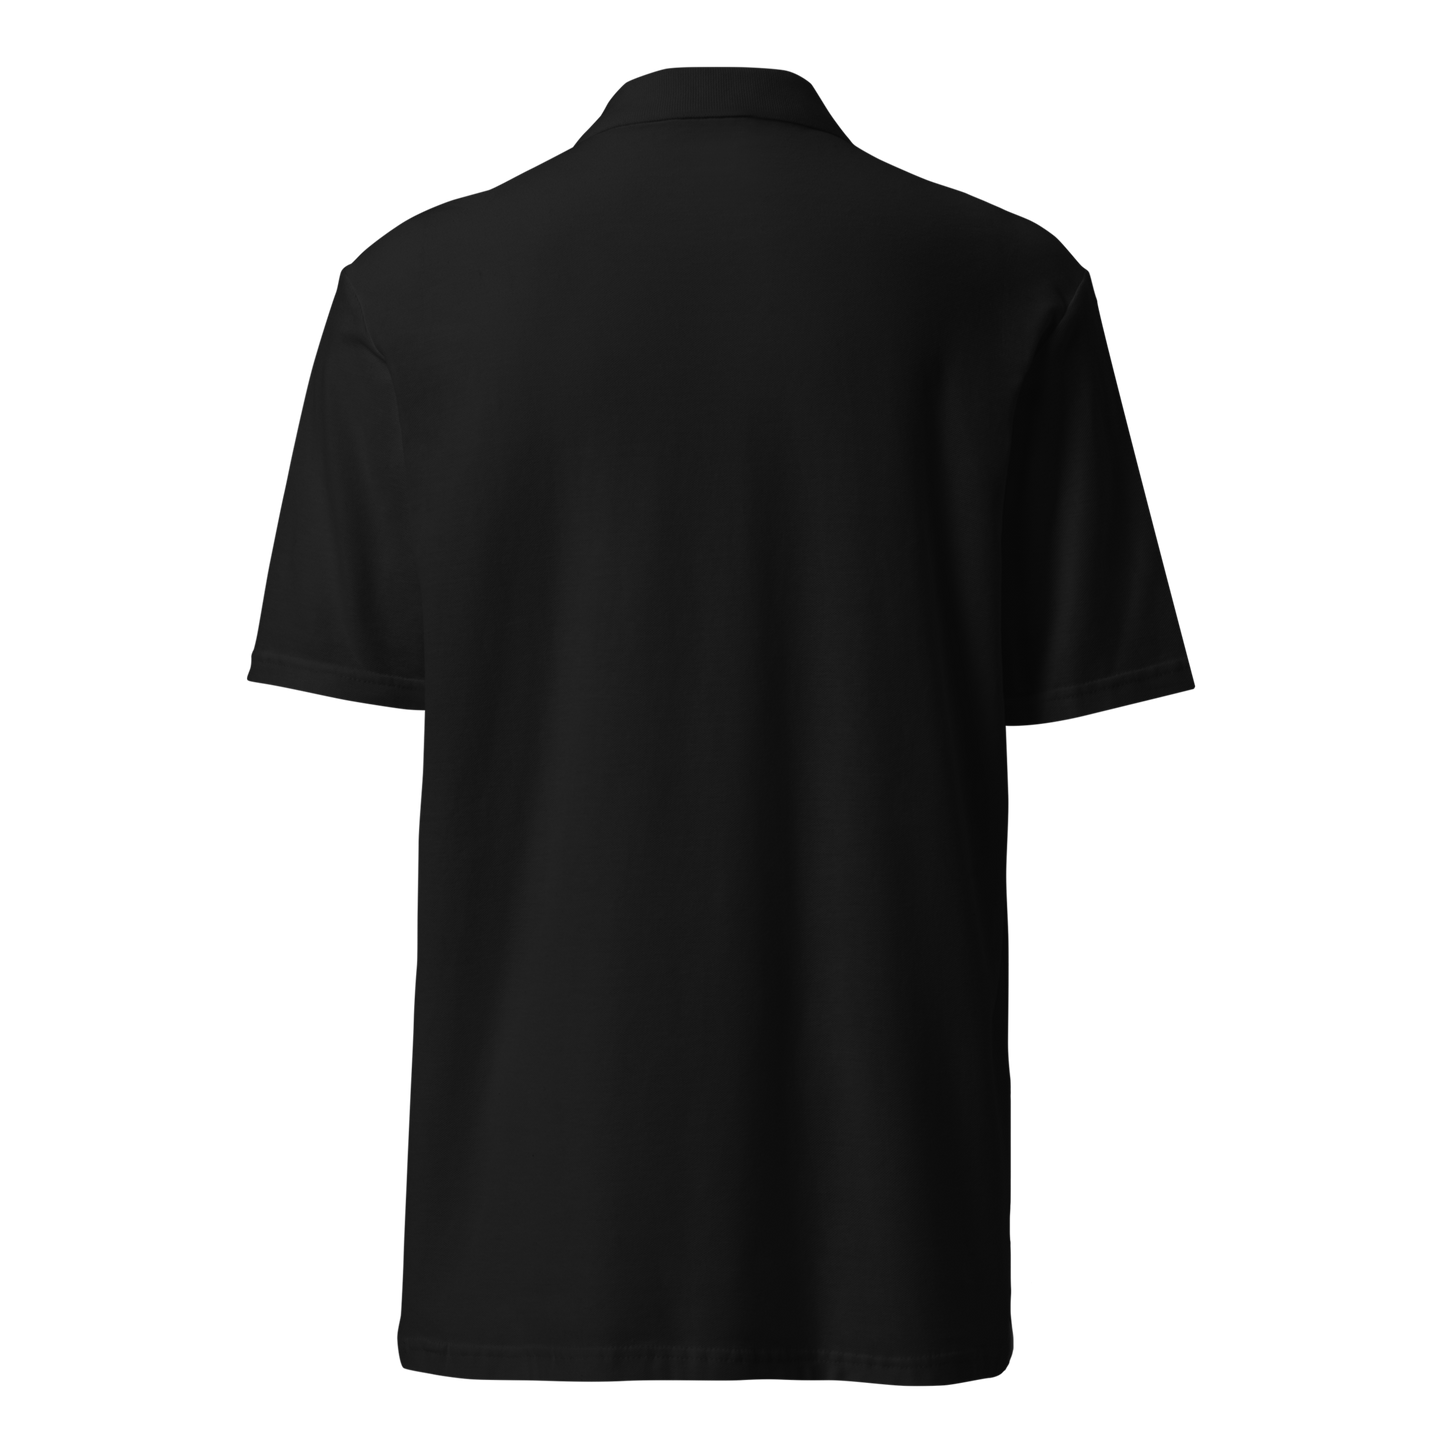 FANDED STAPLE - Unisex pique polo shirt